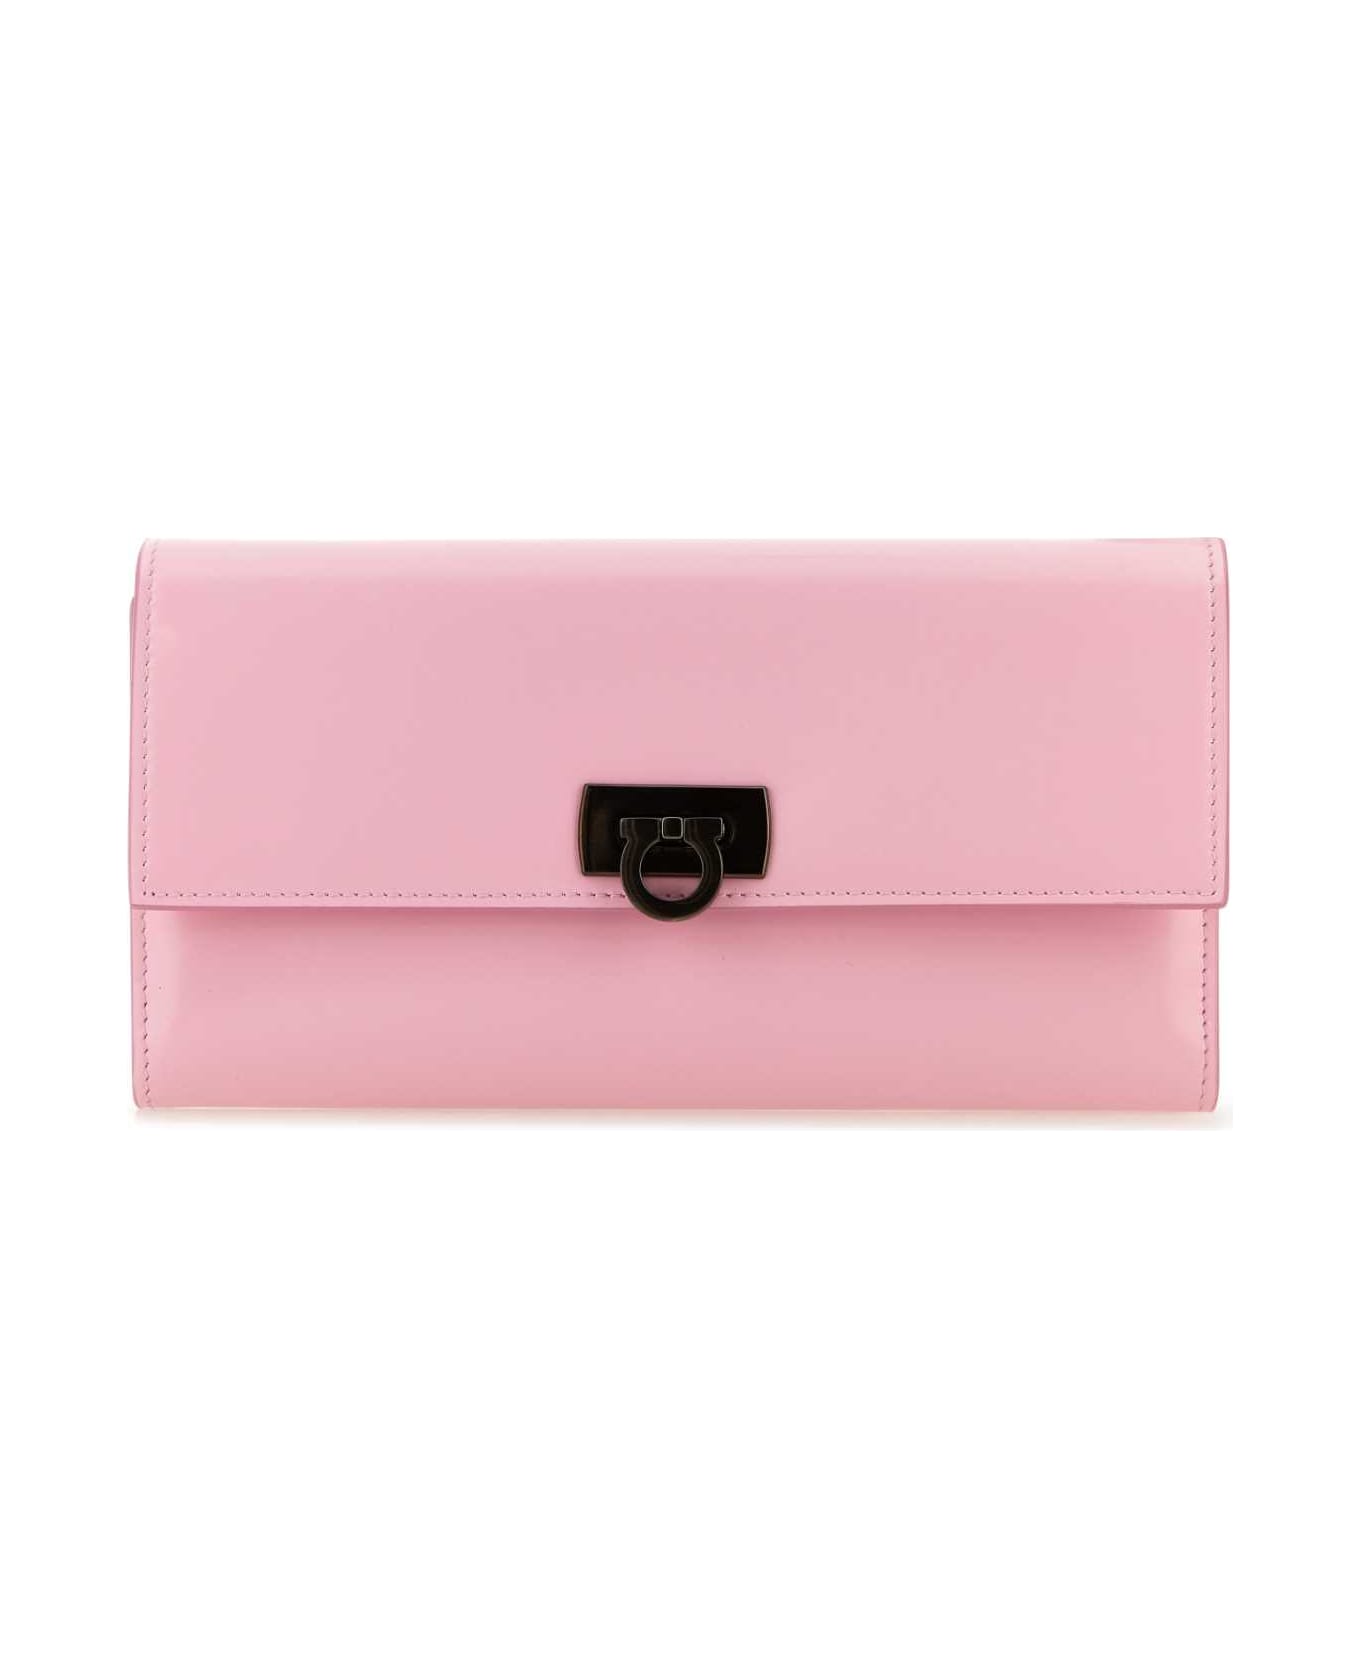 Ferragamo Pink Leather Wallet - BUBBLEGUM